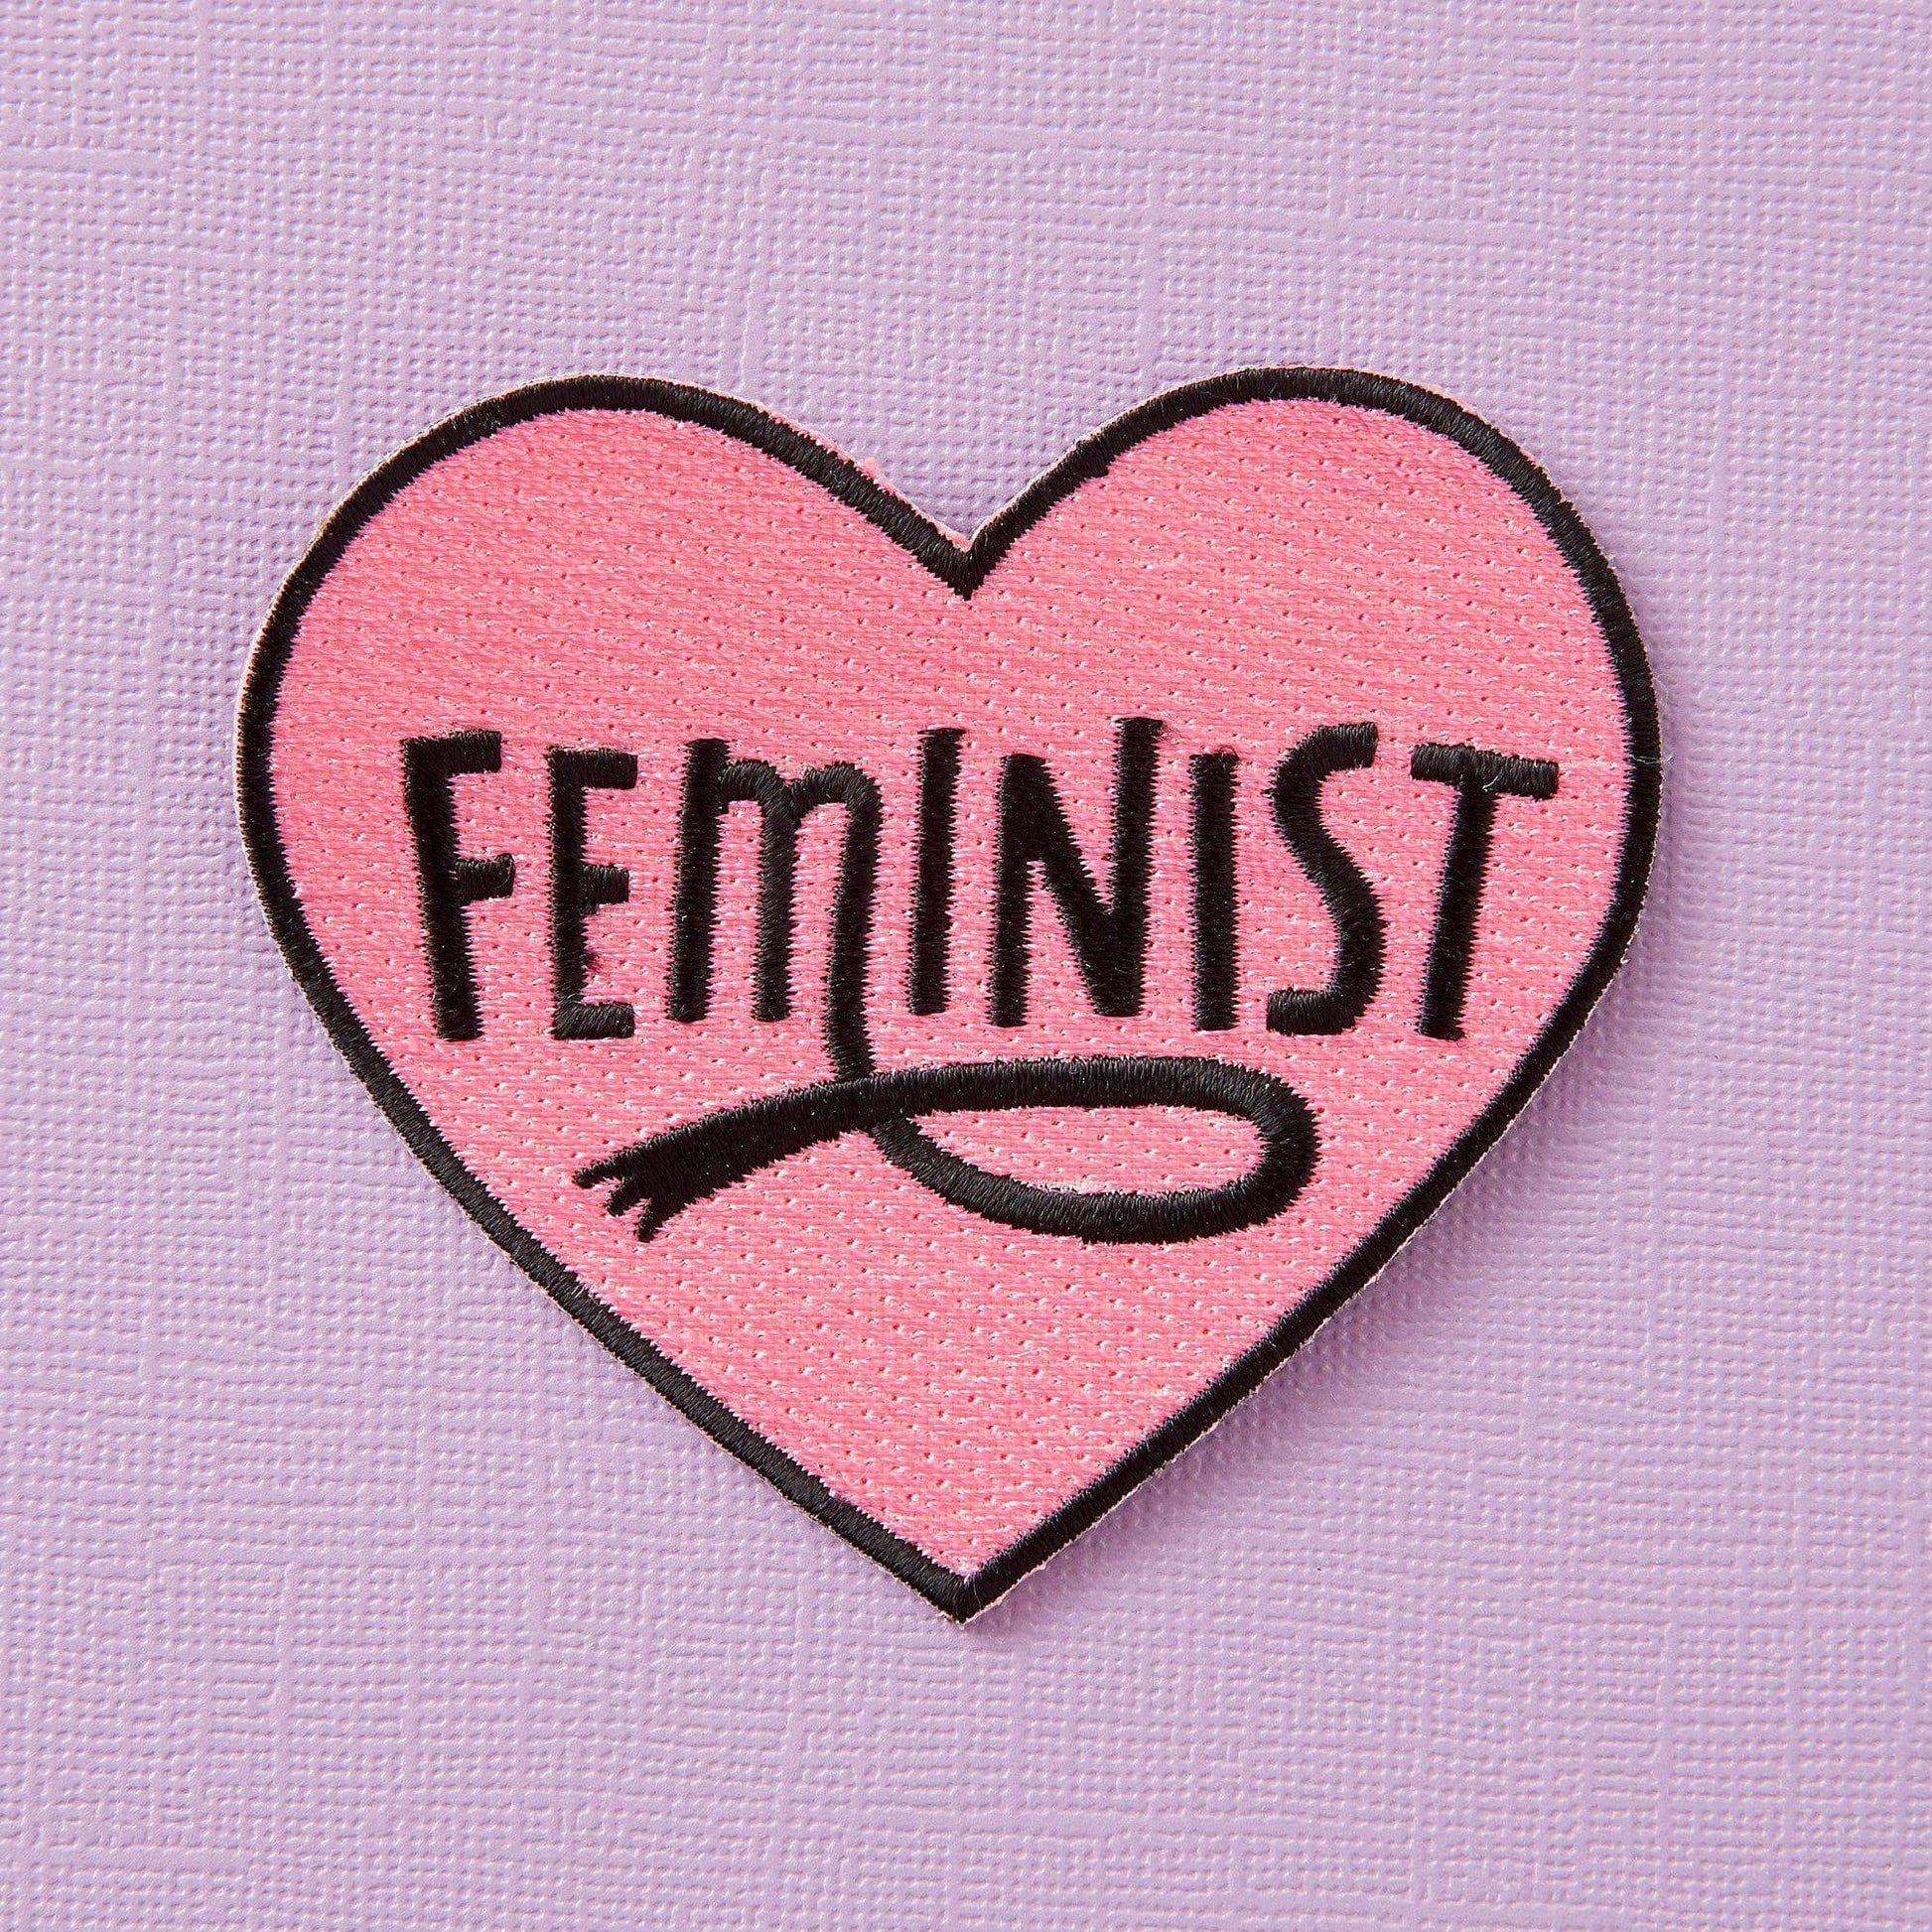 feminist patch 1